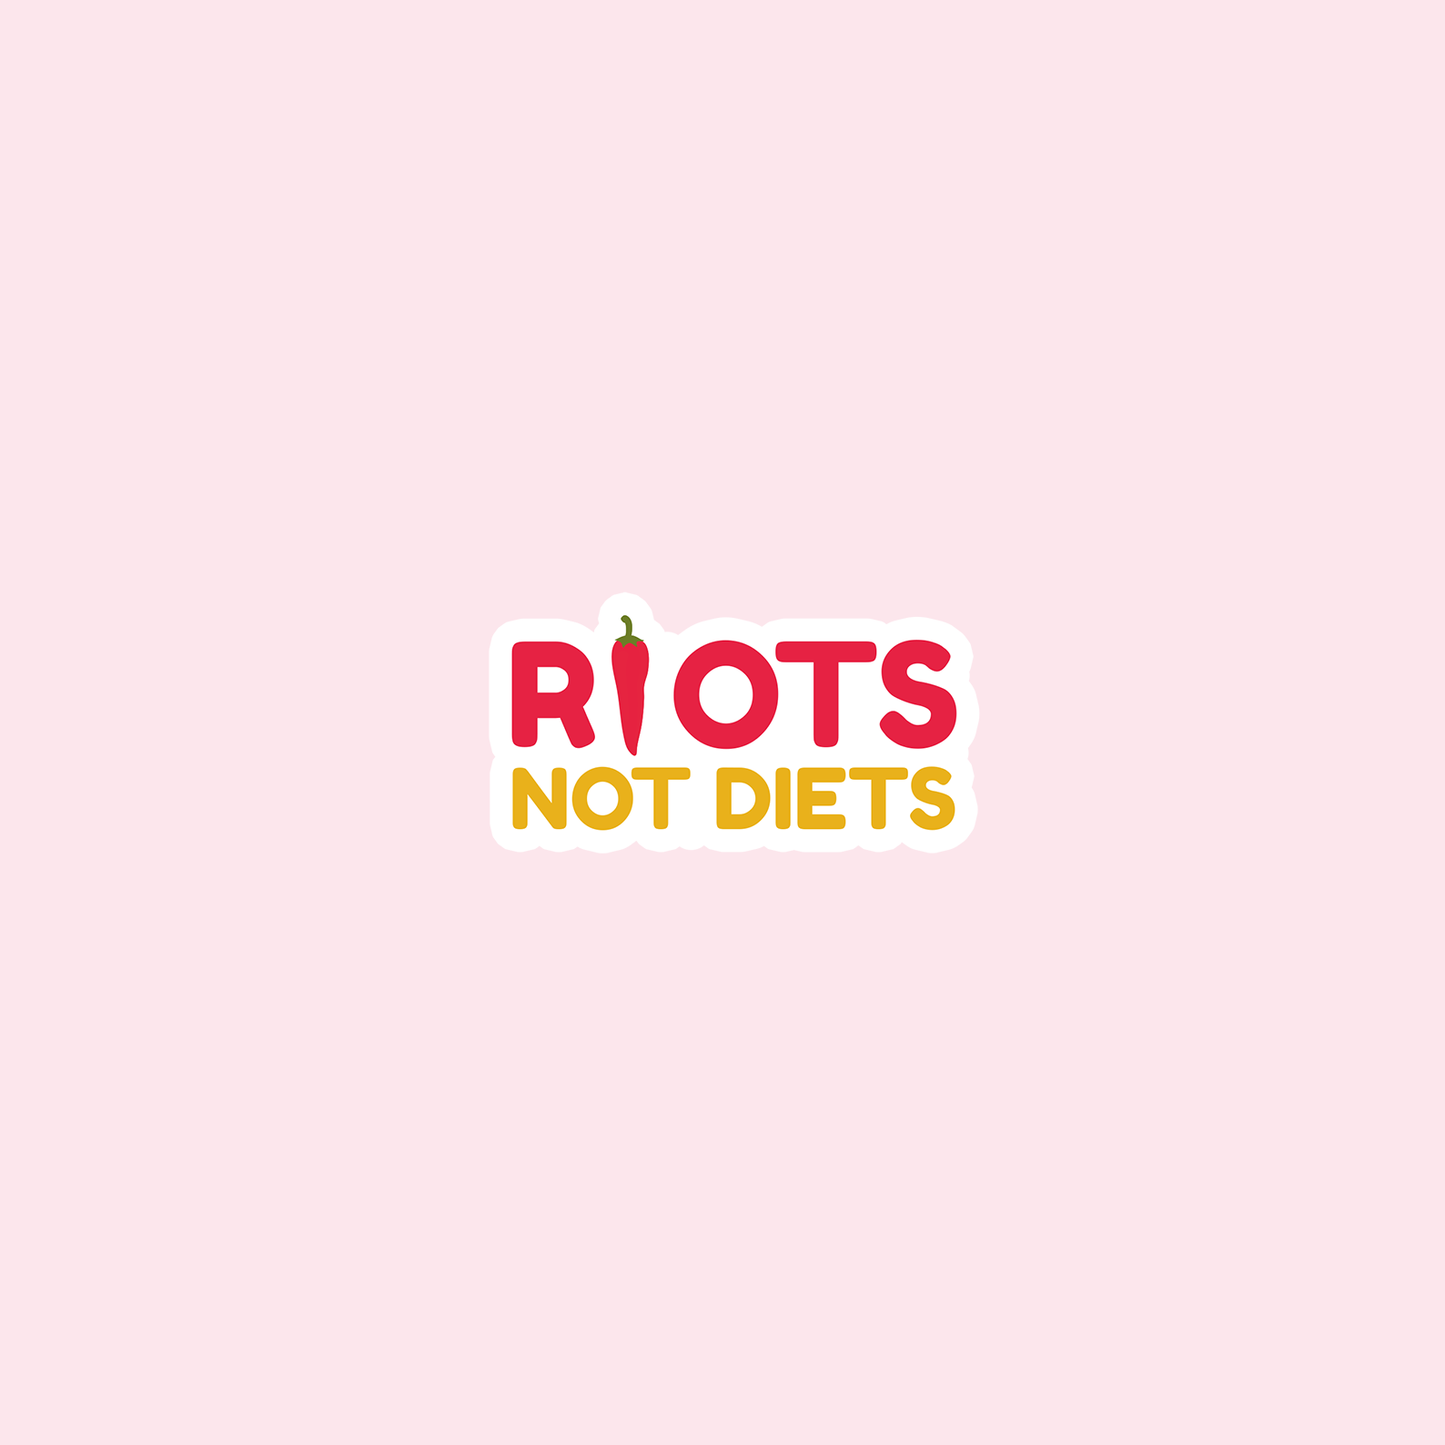 Riots not diets Vinyl Sticker